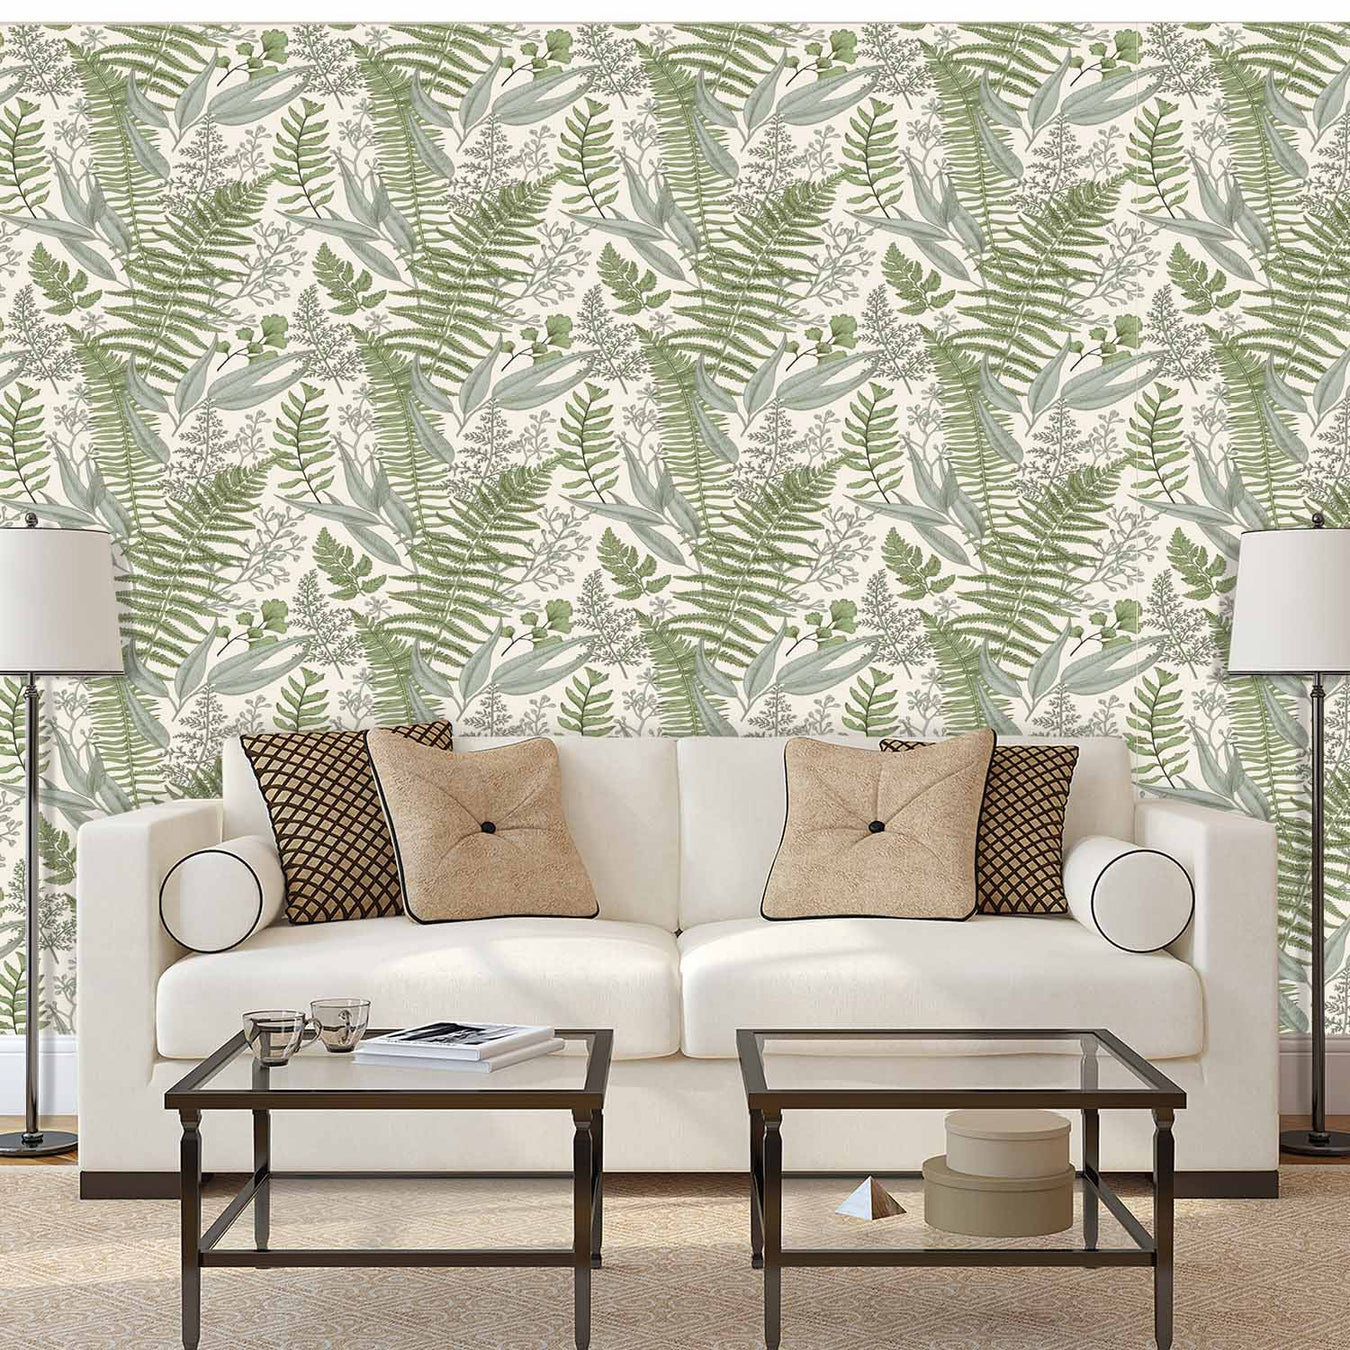 Custom Wallpaper Design, example of fern wallpaper behind a sofa